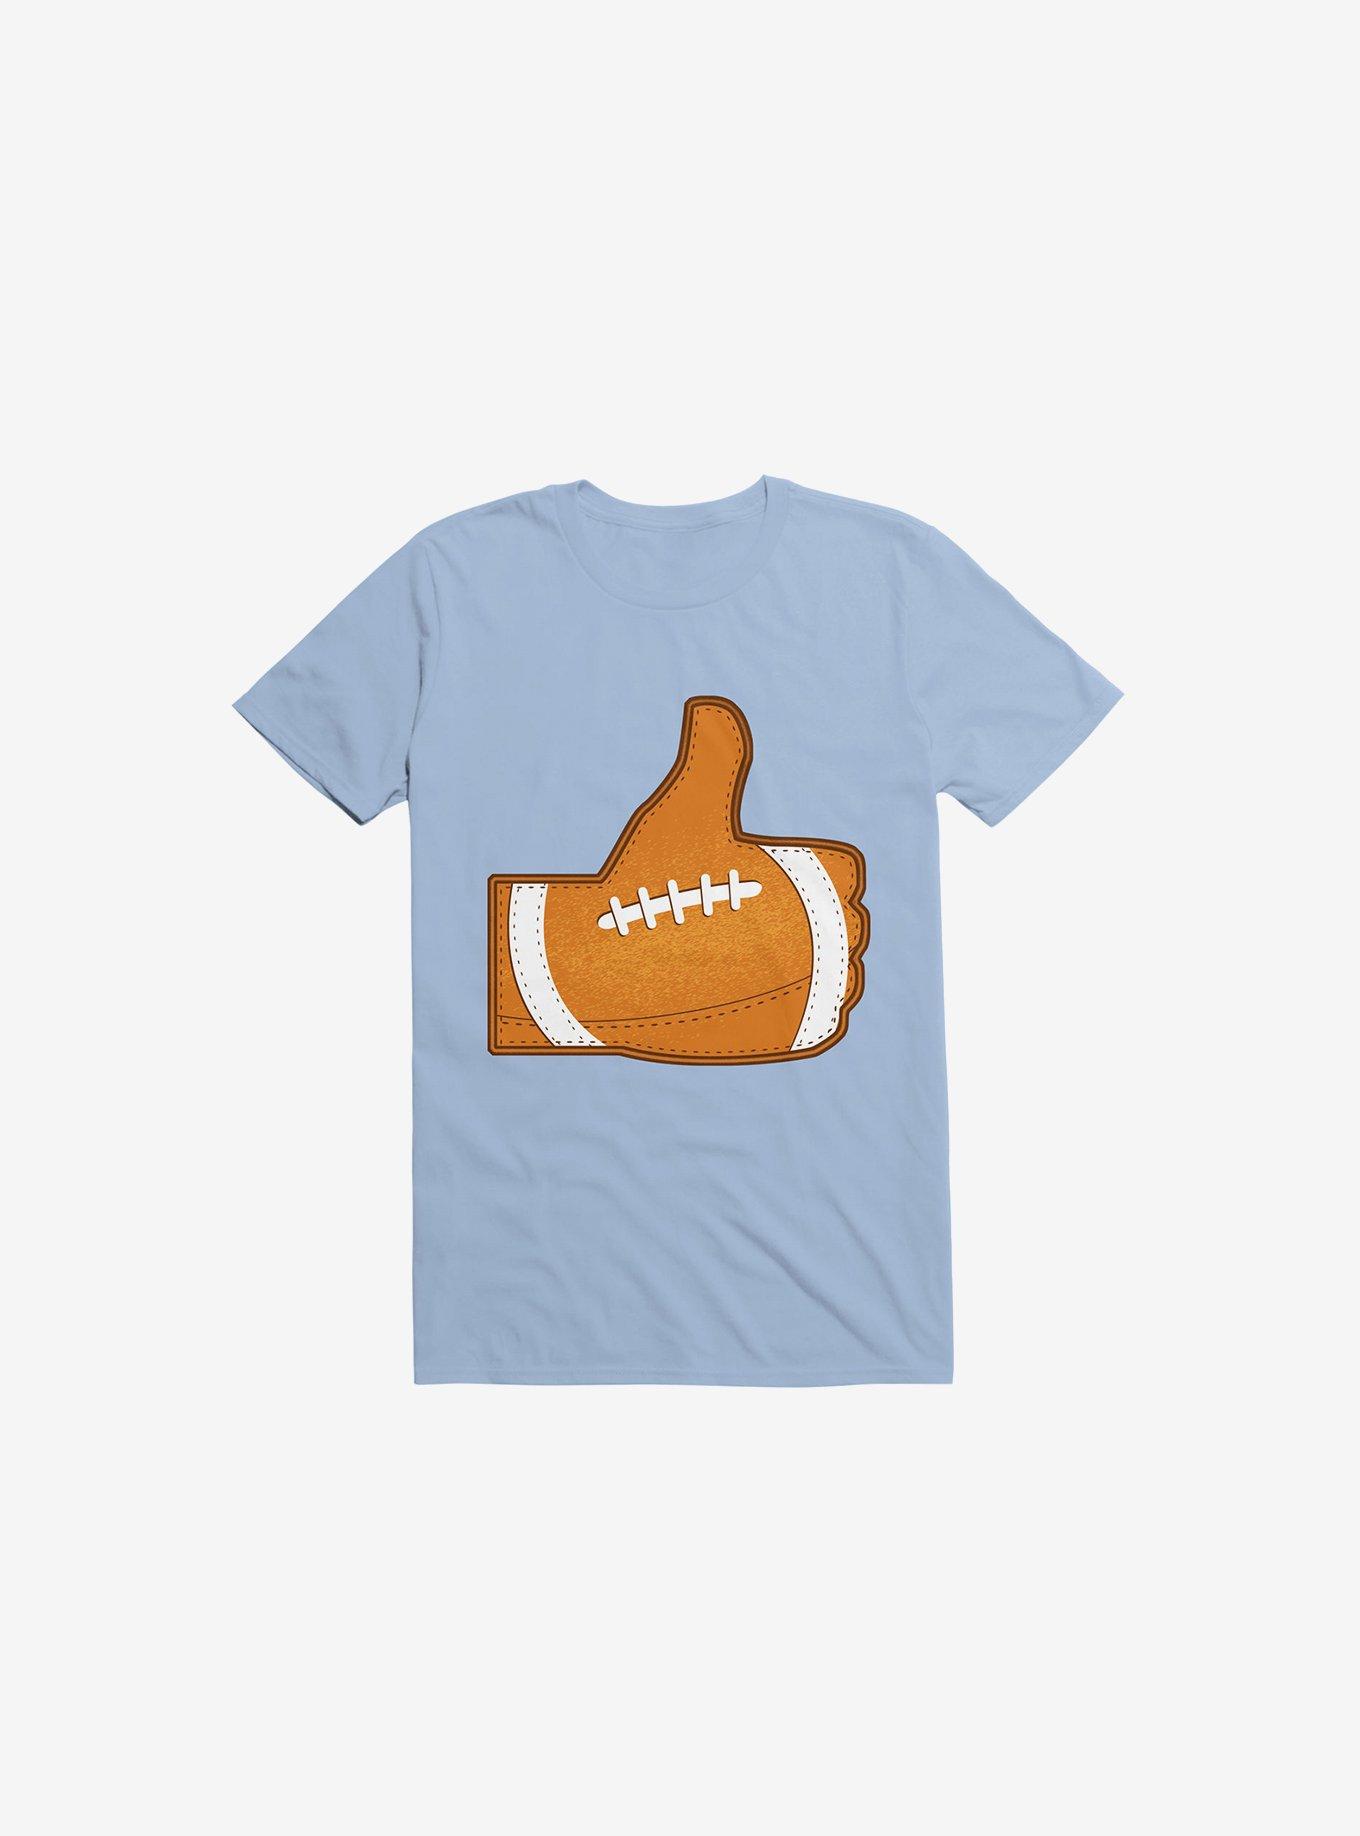 I Love Football 2.0 Light Blue T-Shirt